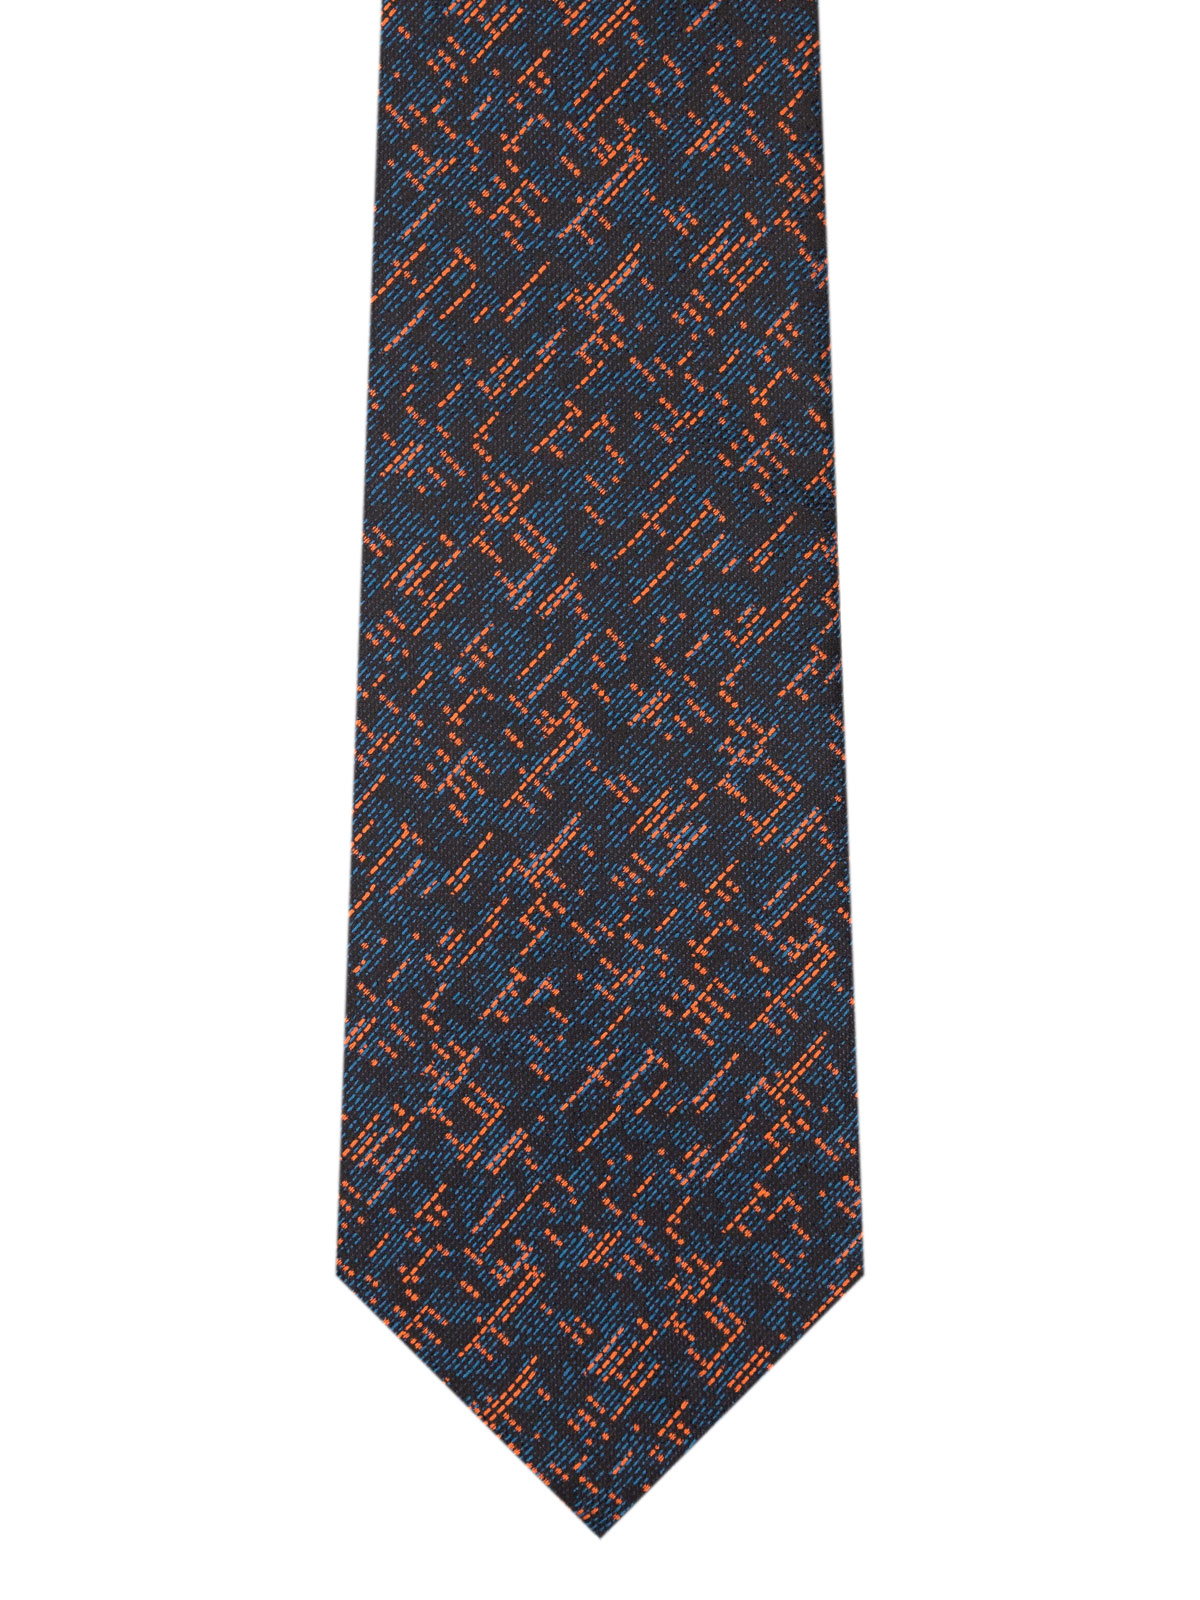 Cravata neagra cu fire portocalii - 10202 - € 14.06 img2